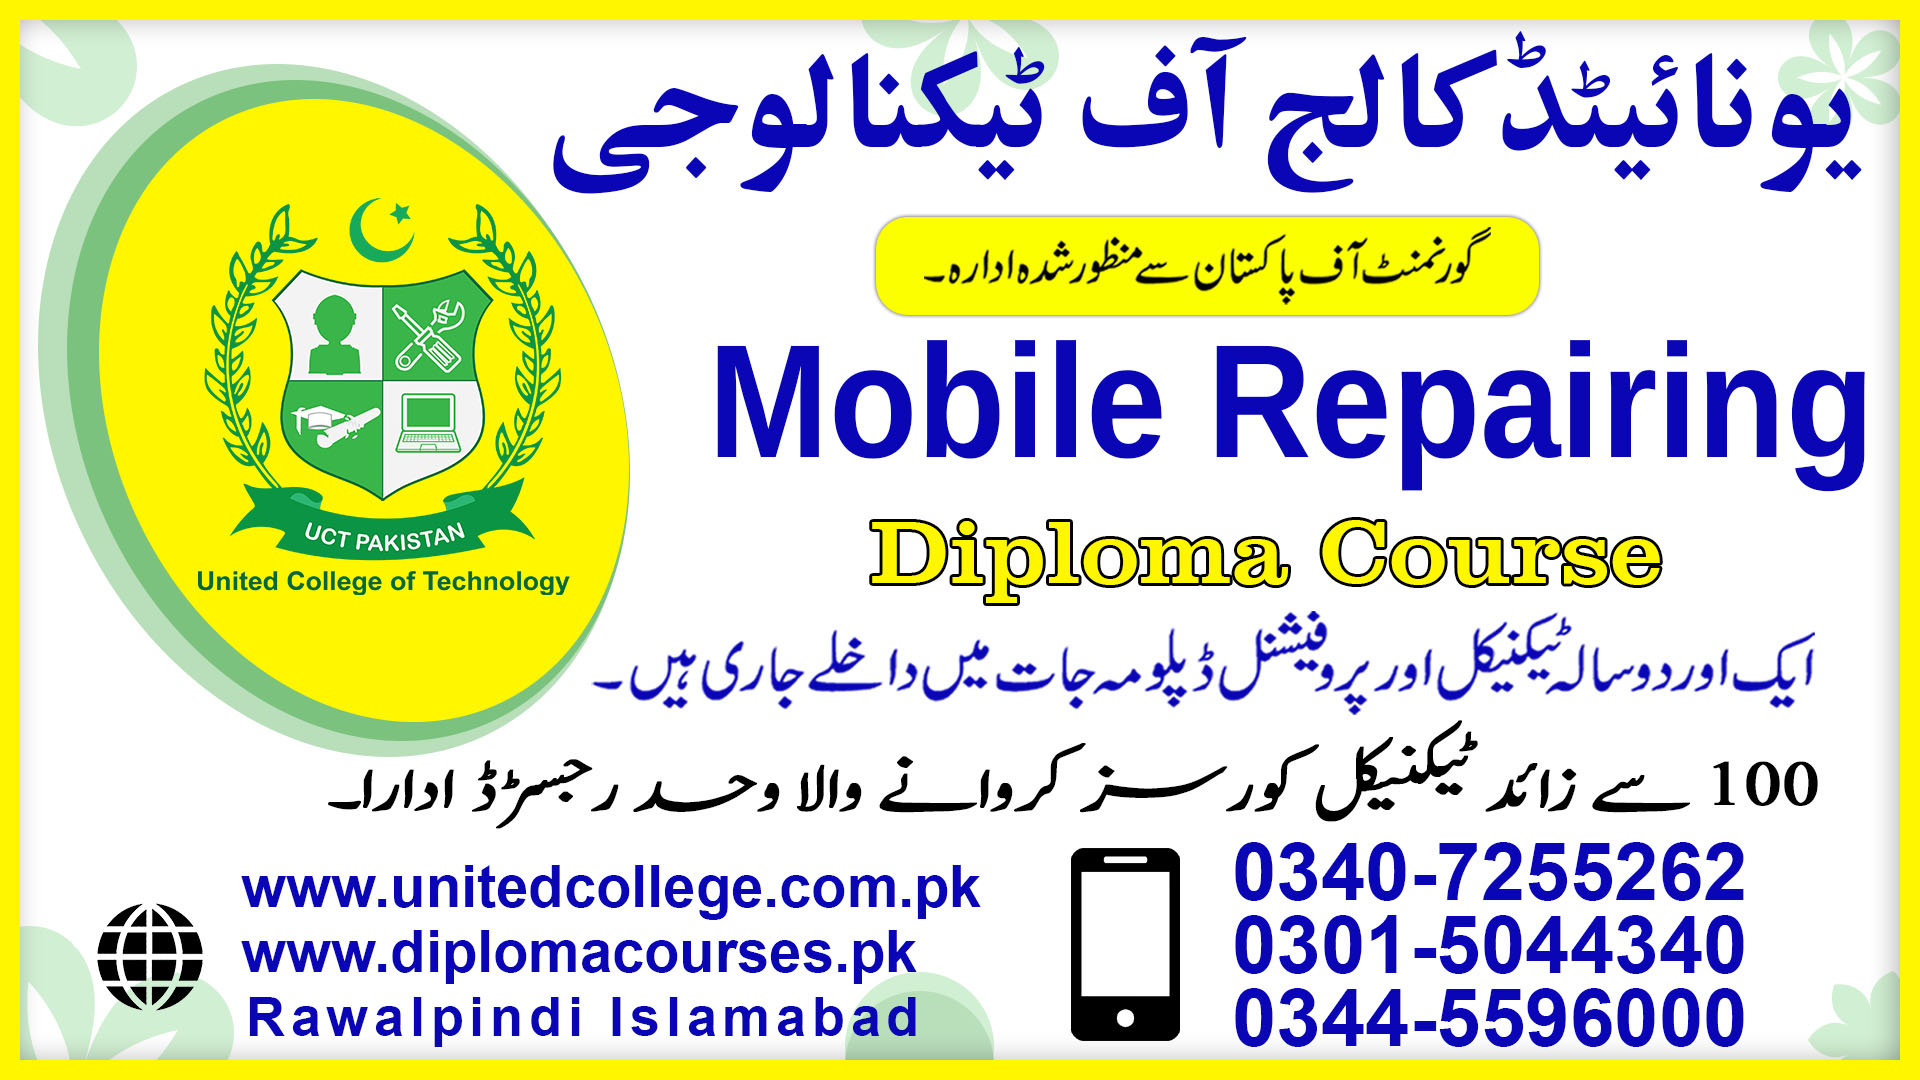 MOBILE REPAIRING COURSE IN RAWALPINDI ISLAMABAD PAKISTAN